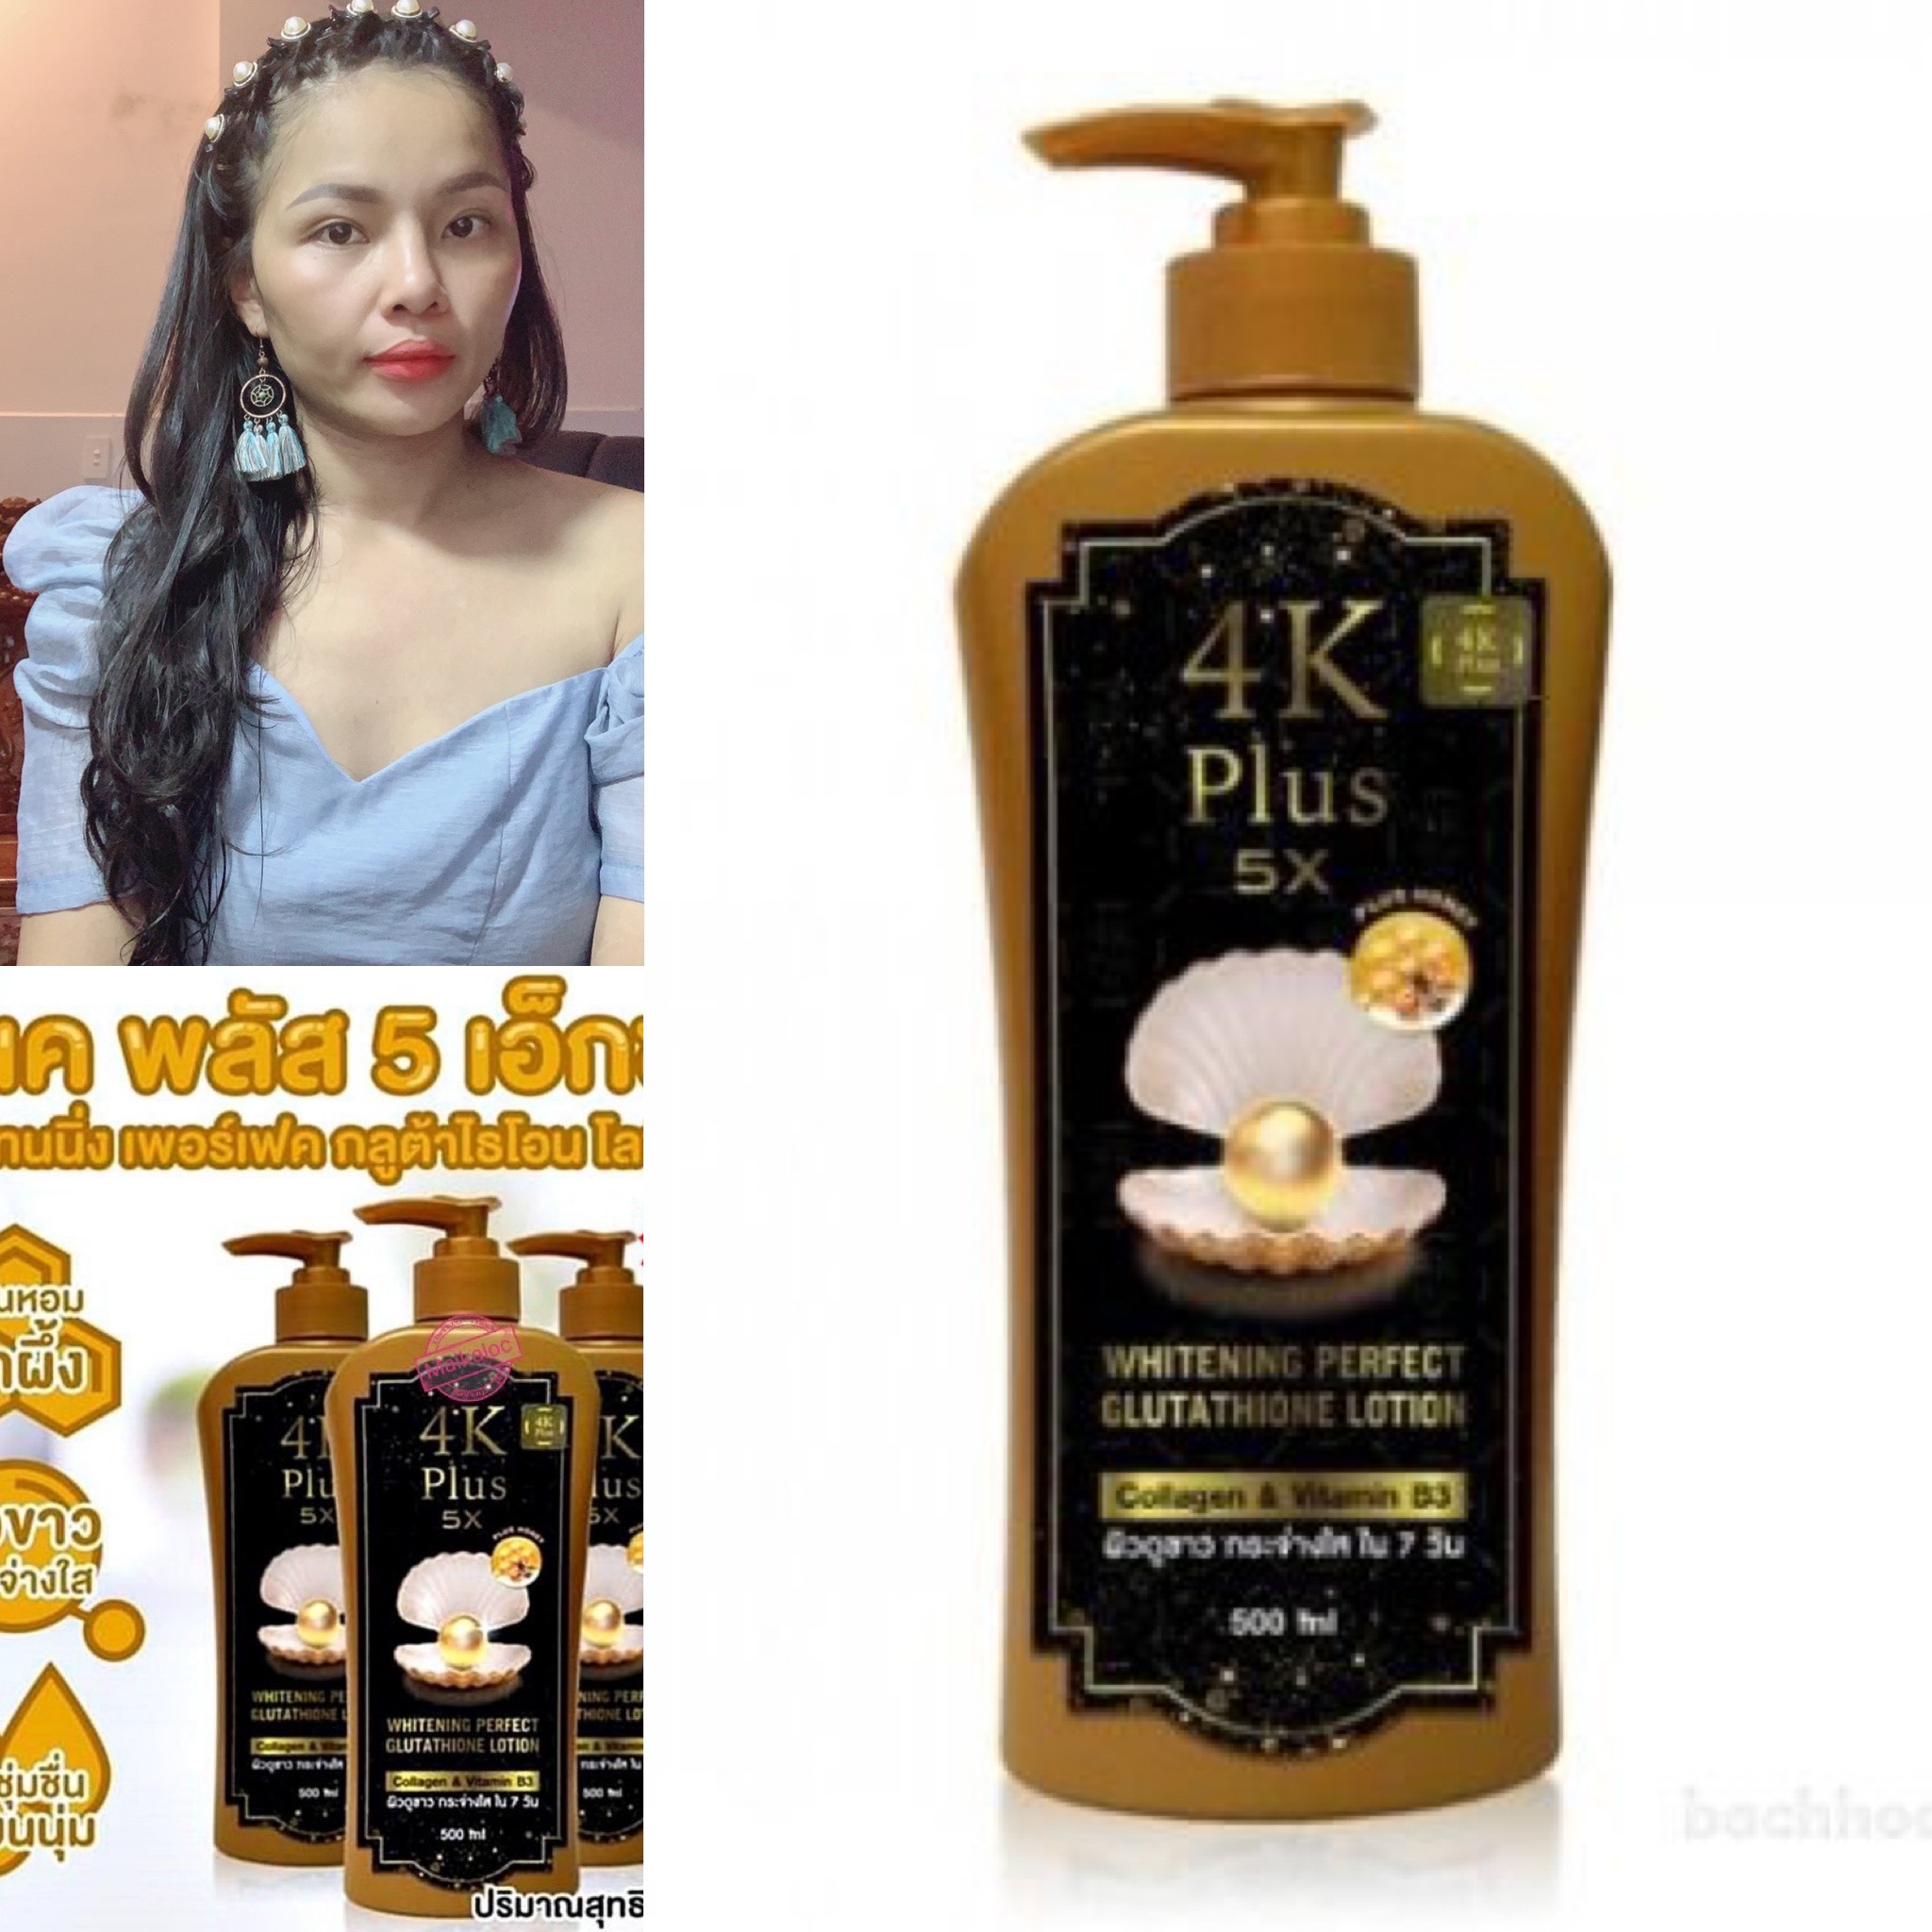 san-pham-khac-sua-duong-the-4k-plus-5x-whitening-perfect-glutathione-lotion-thai-lan-500ml-4784